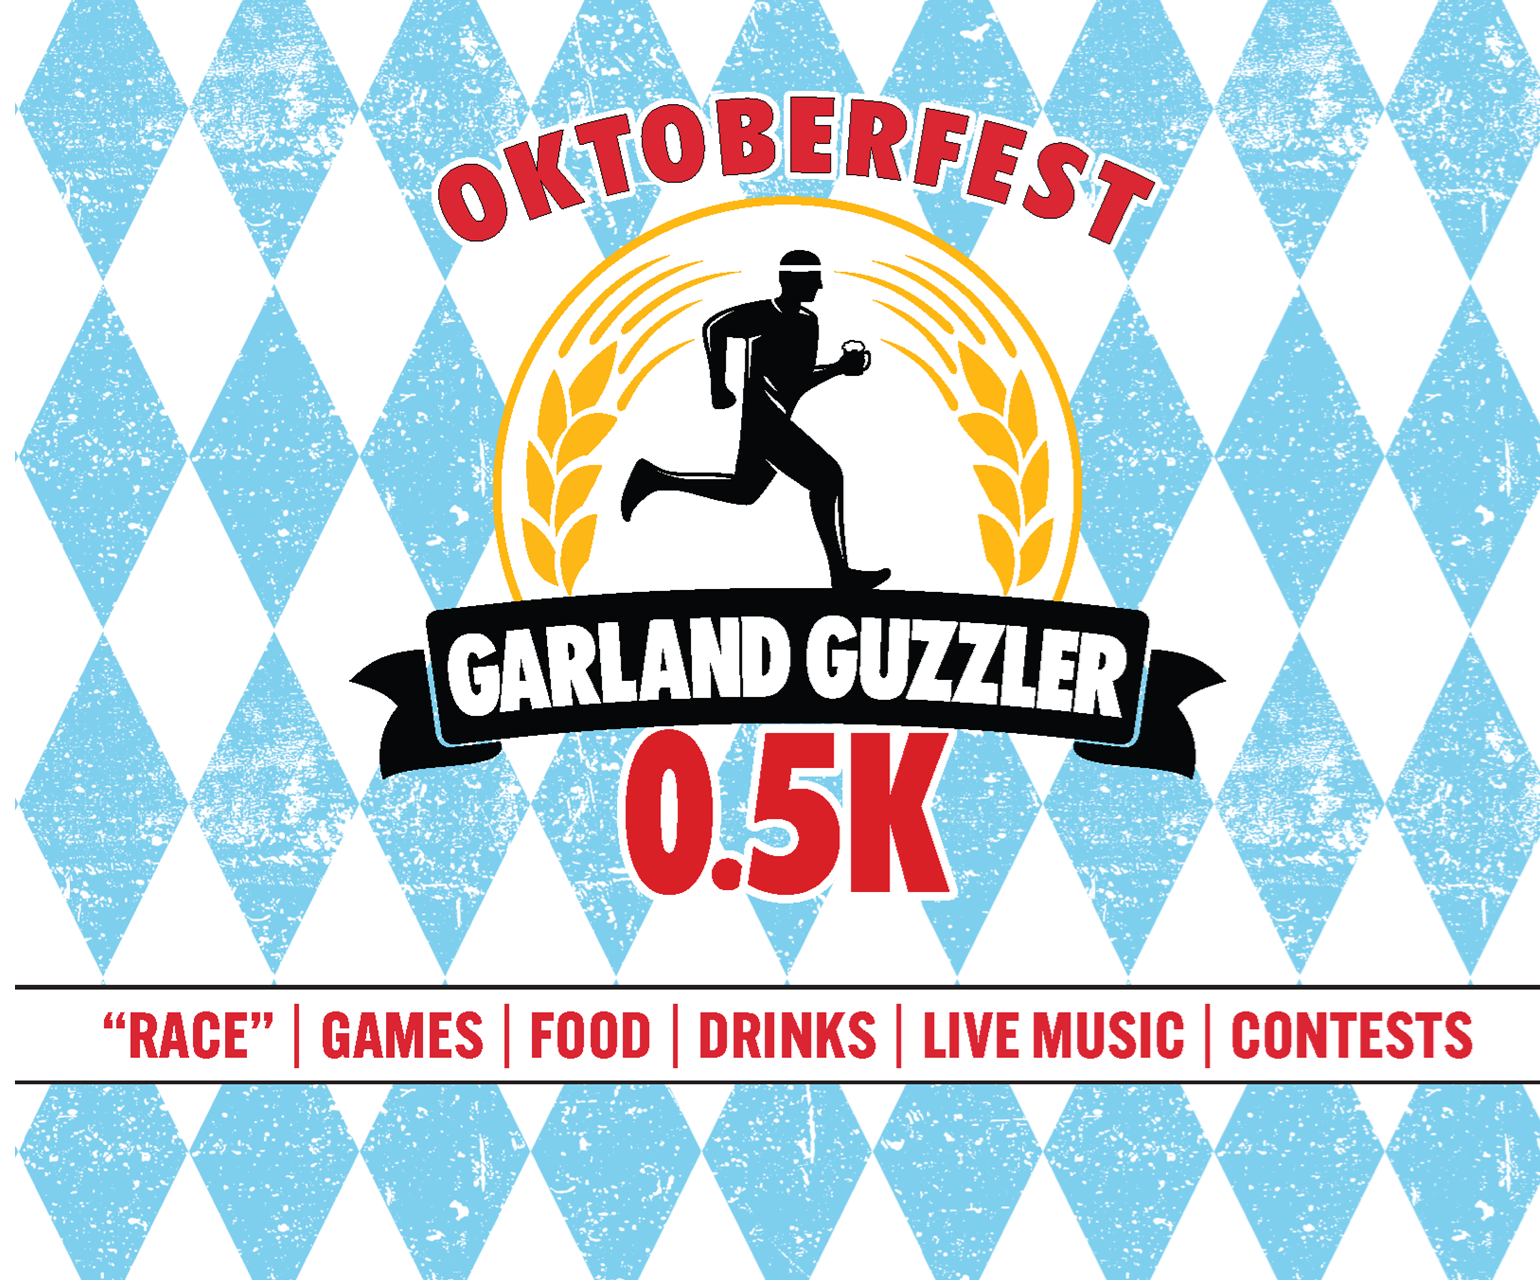 6th Annual Garland Guzzler 0.5K Race & Oktoberfest